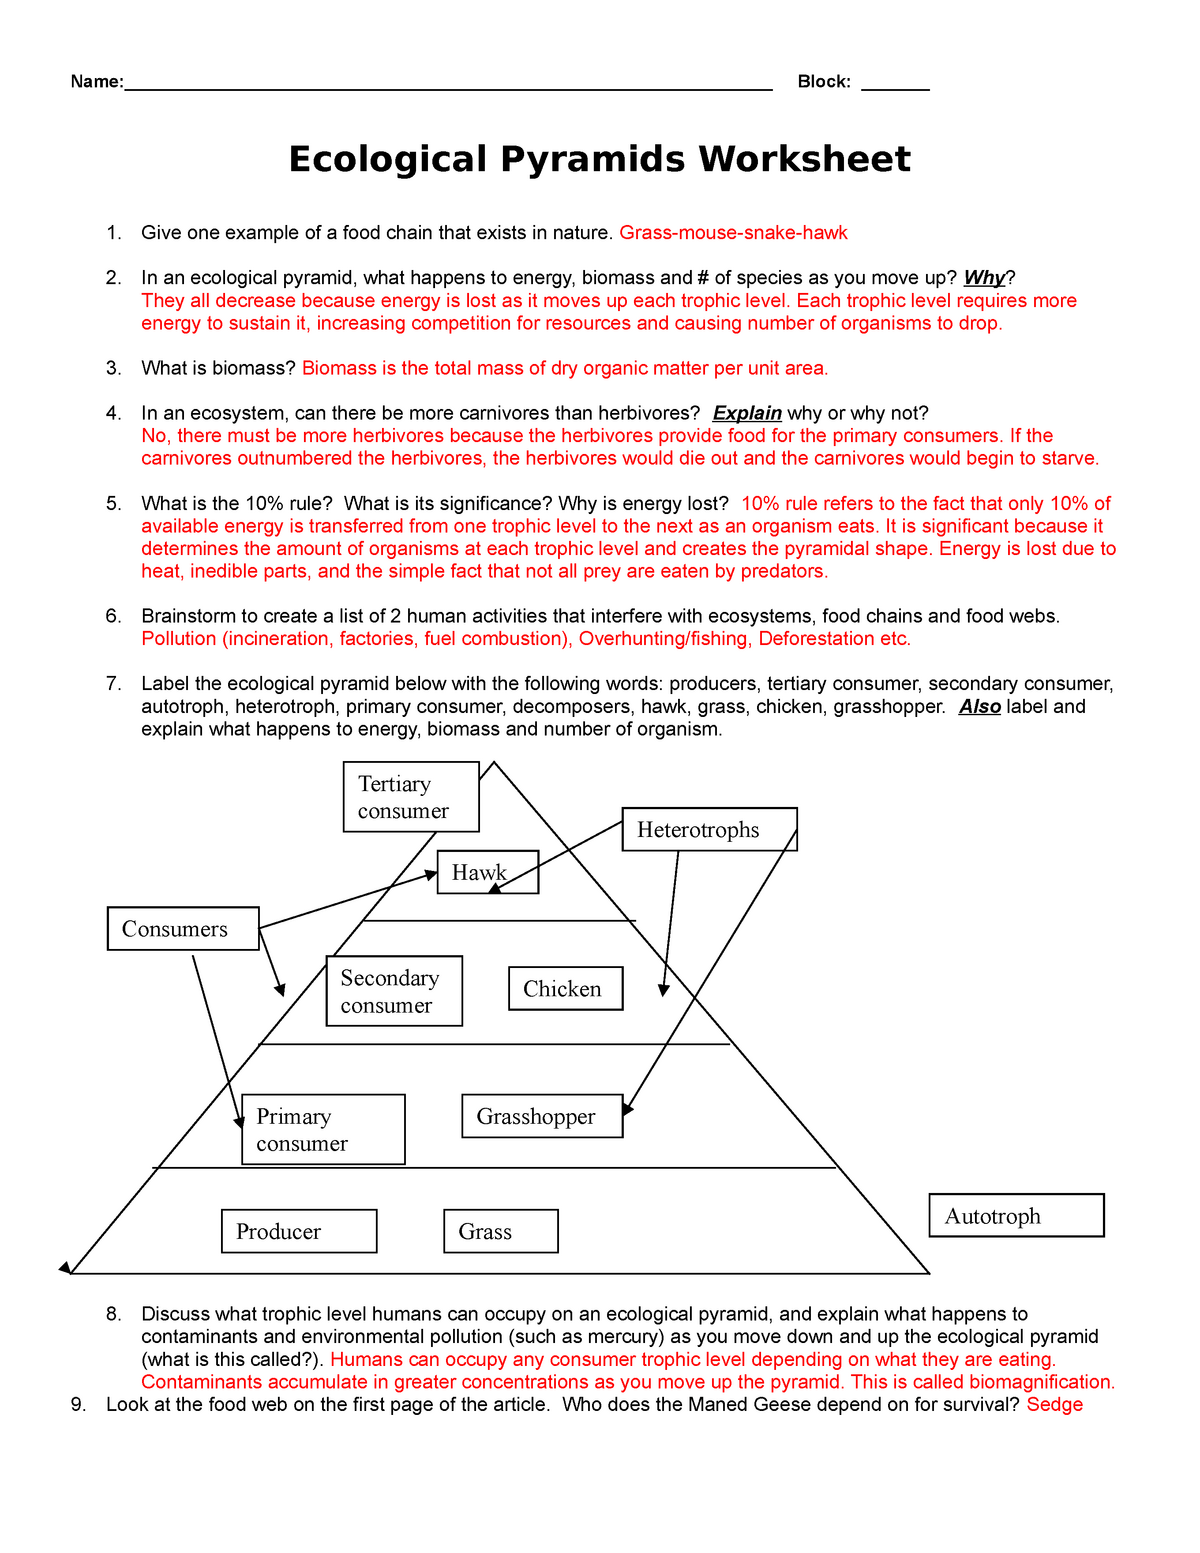 KEY ecological-pyramids-worksheet 10 - LIFESCI 10P010 - McMaster Within Ecological Pyramids Worksheet Answer Key